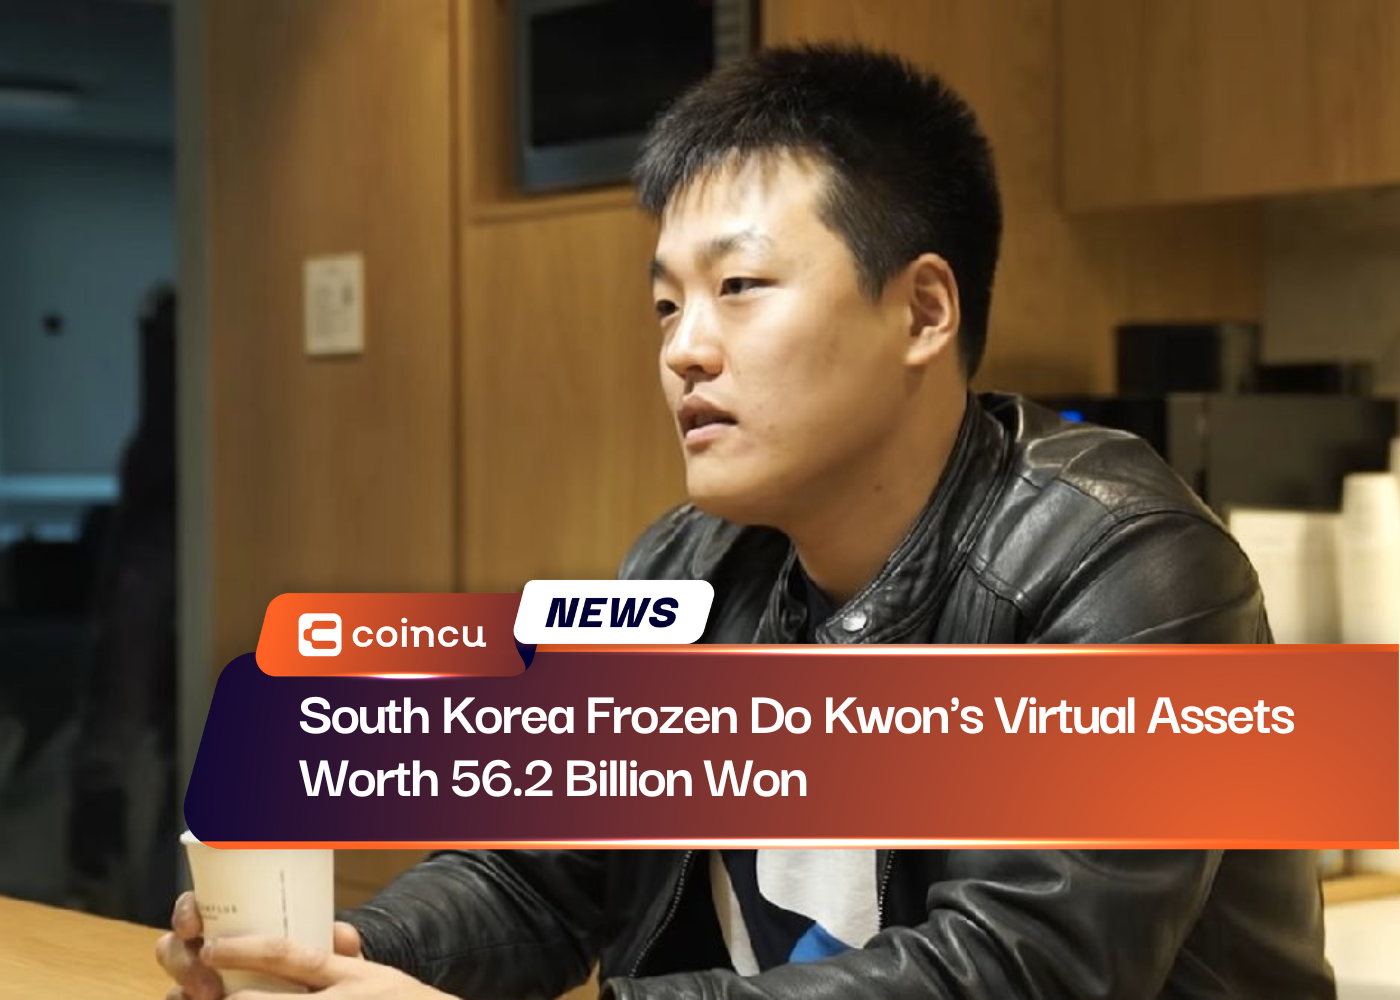 South Korea Frozen Do Kwon's Virtual Assets Worth 56.2 Billion Won